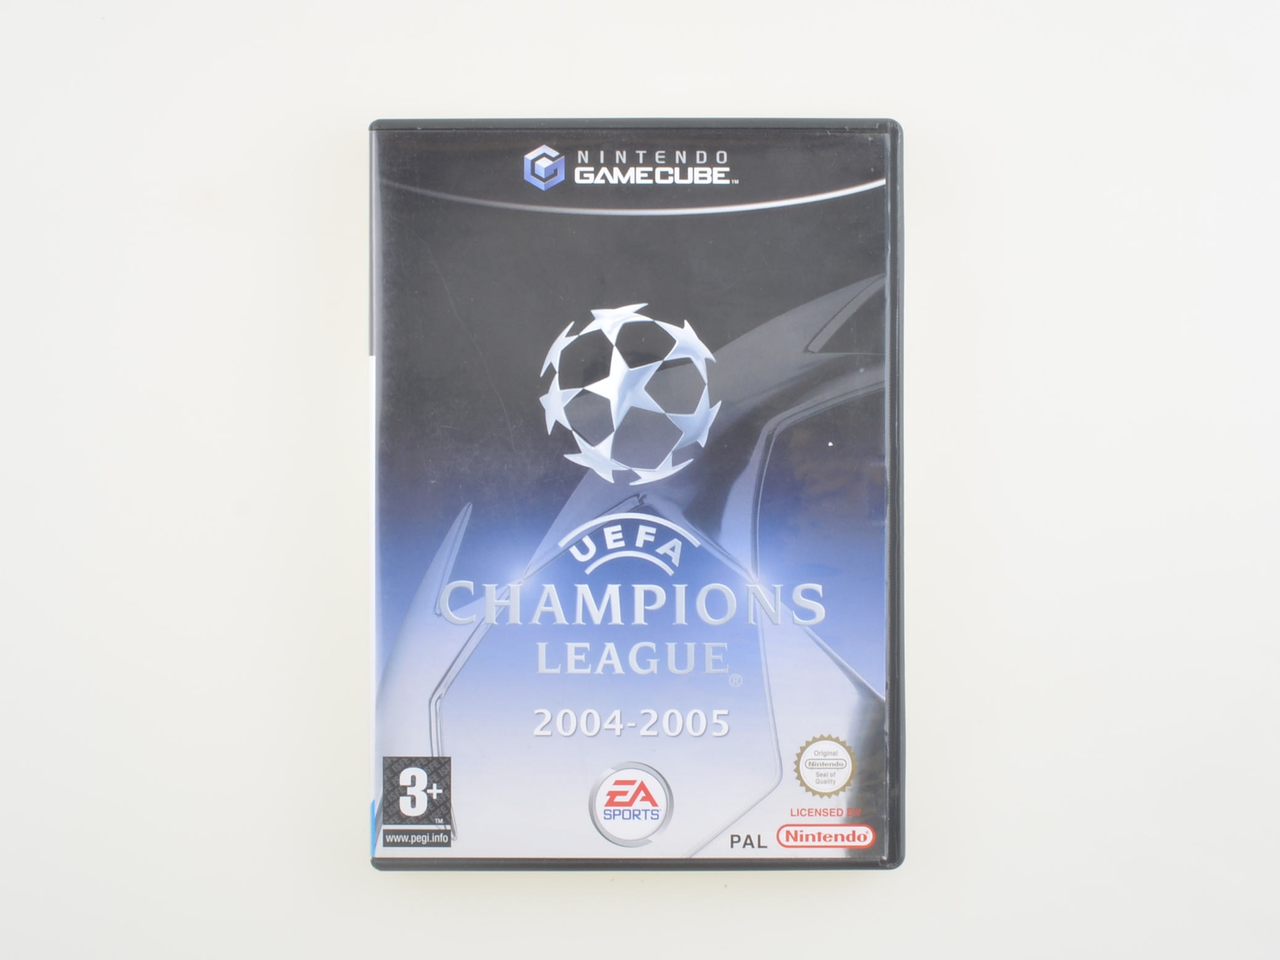 UEFA Champions League 2004-2005 Kopen | Gamecube Games